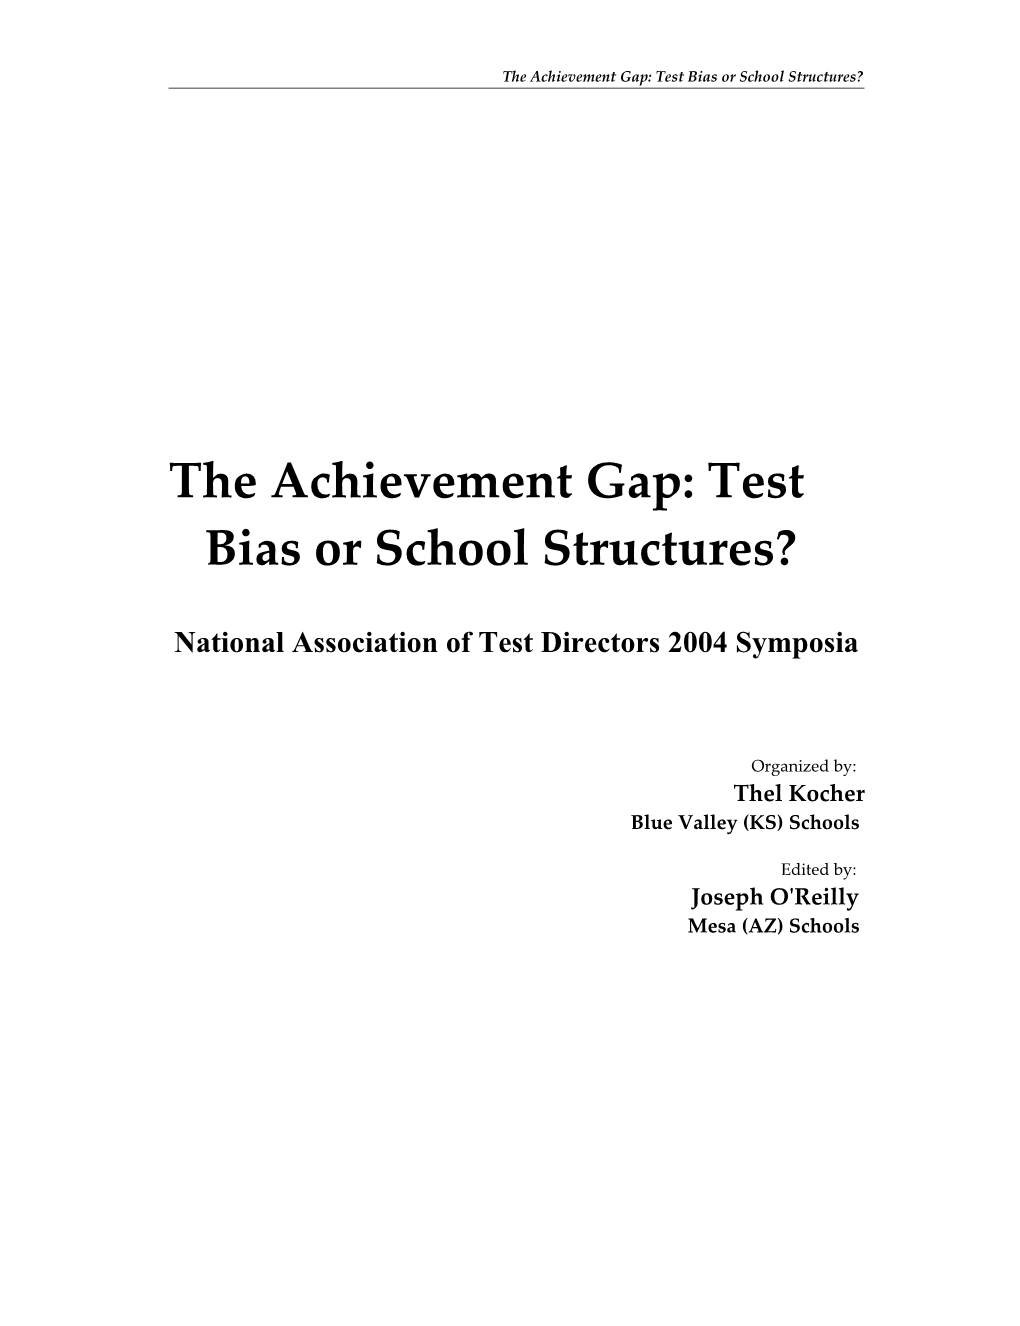 The Achievement Gap: Test Bias Or School Structures?